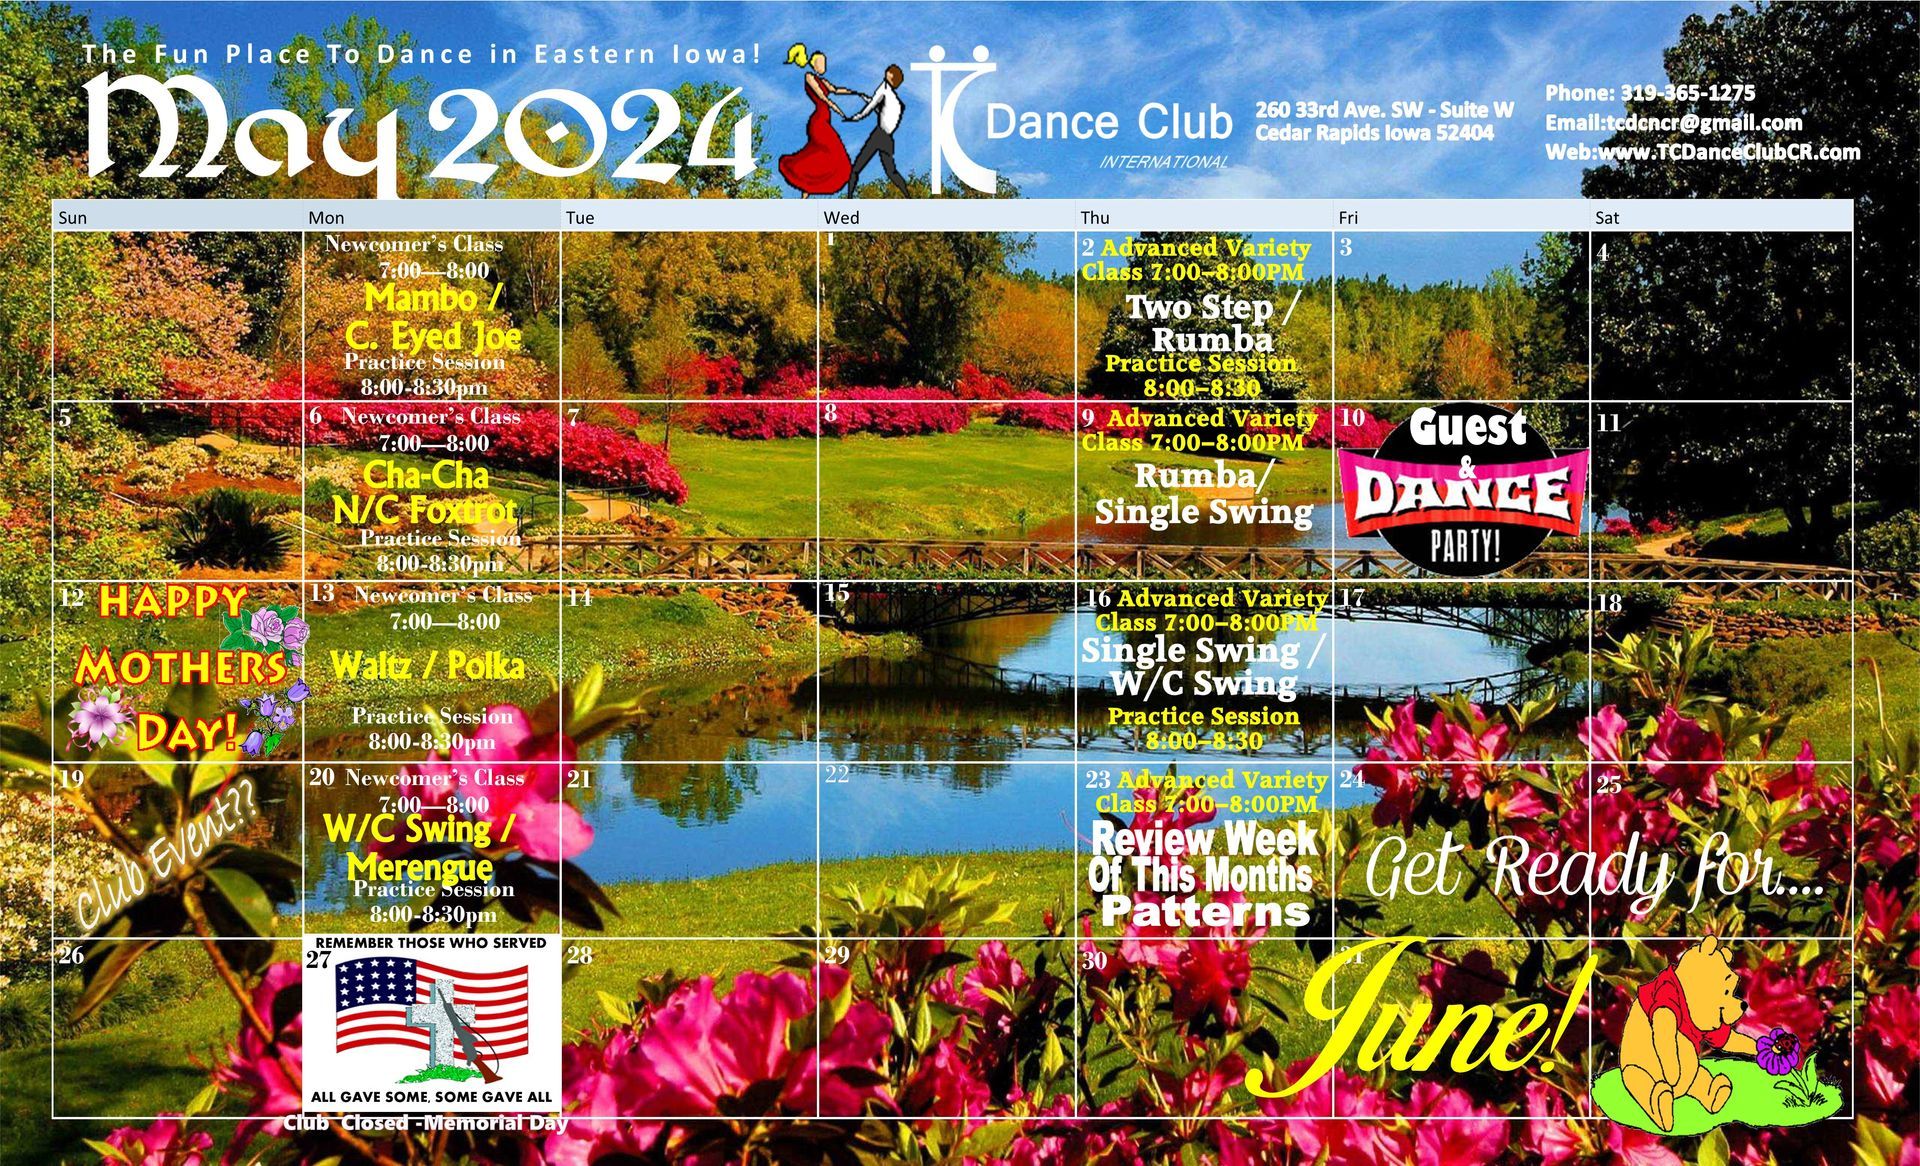 a calendar for march 2024 with patrick 's day on it - Cedar Rapids, IA - TC Dance Club Intl